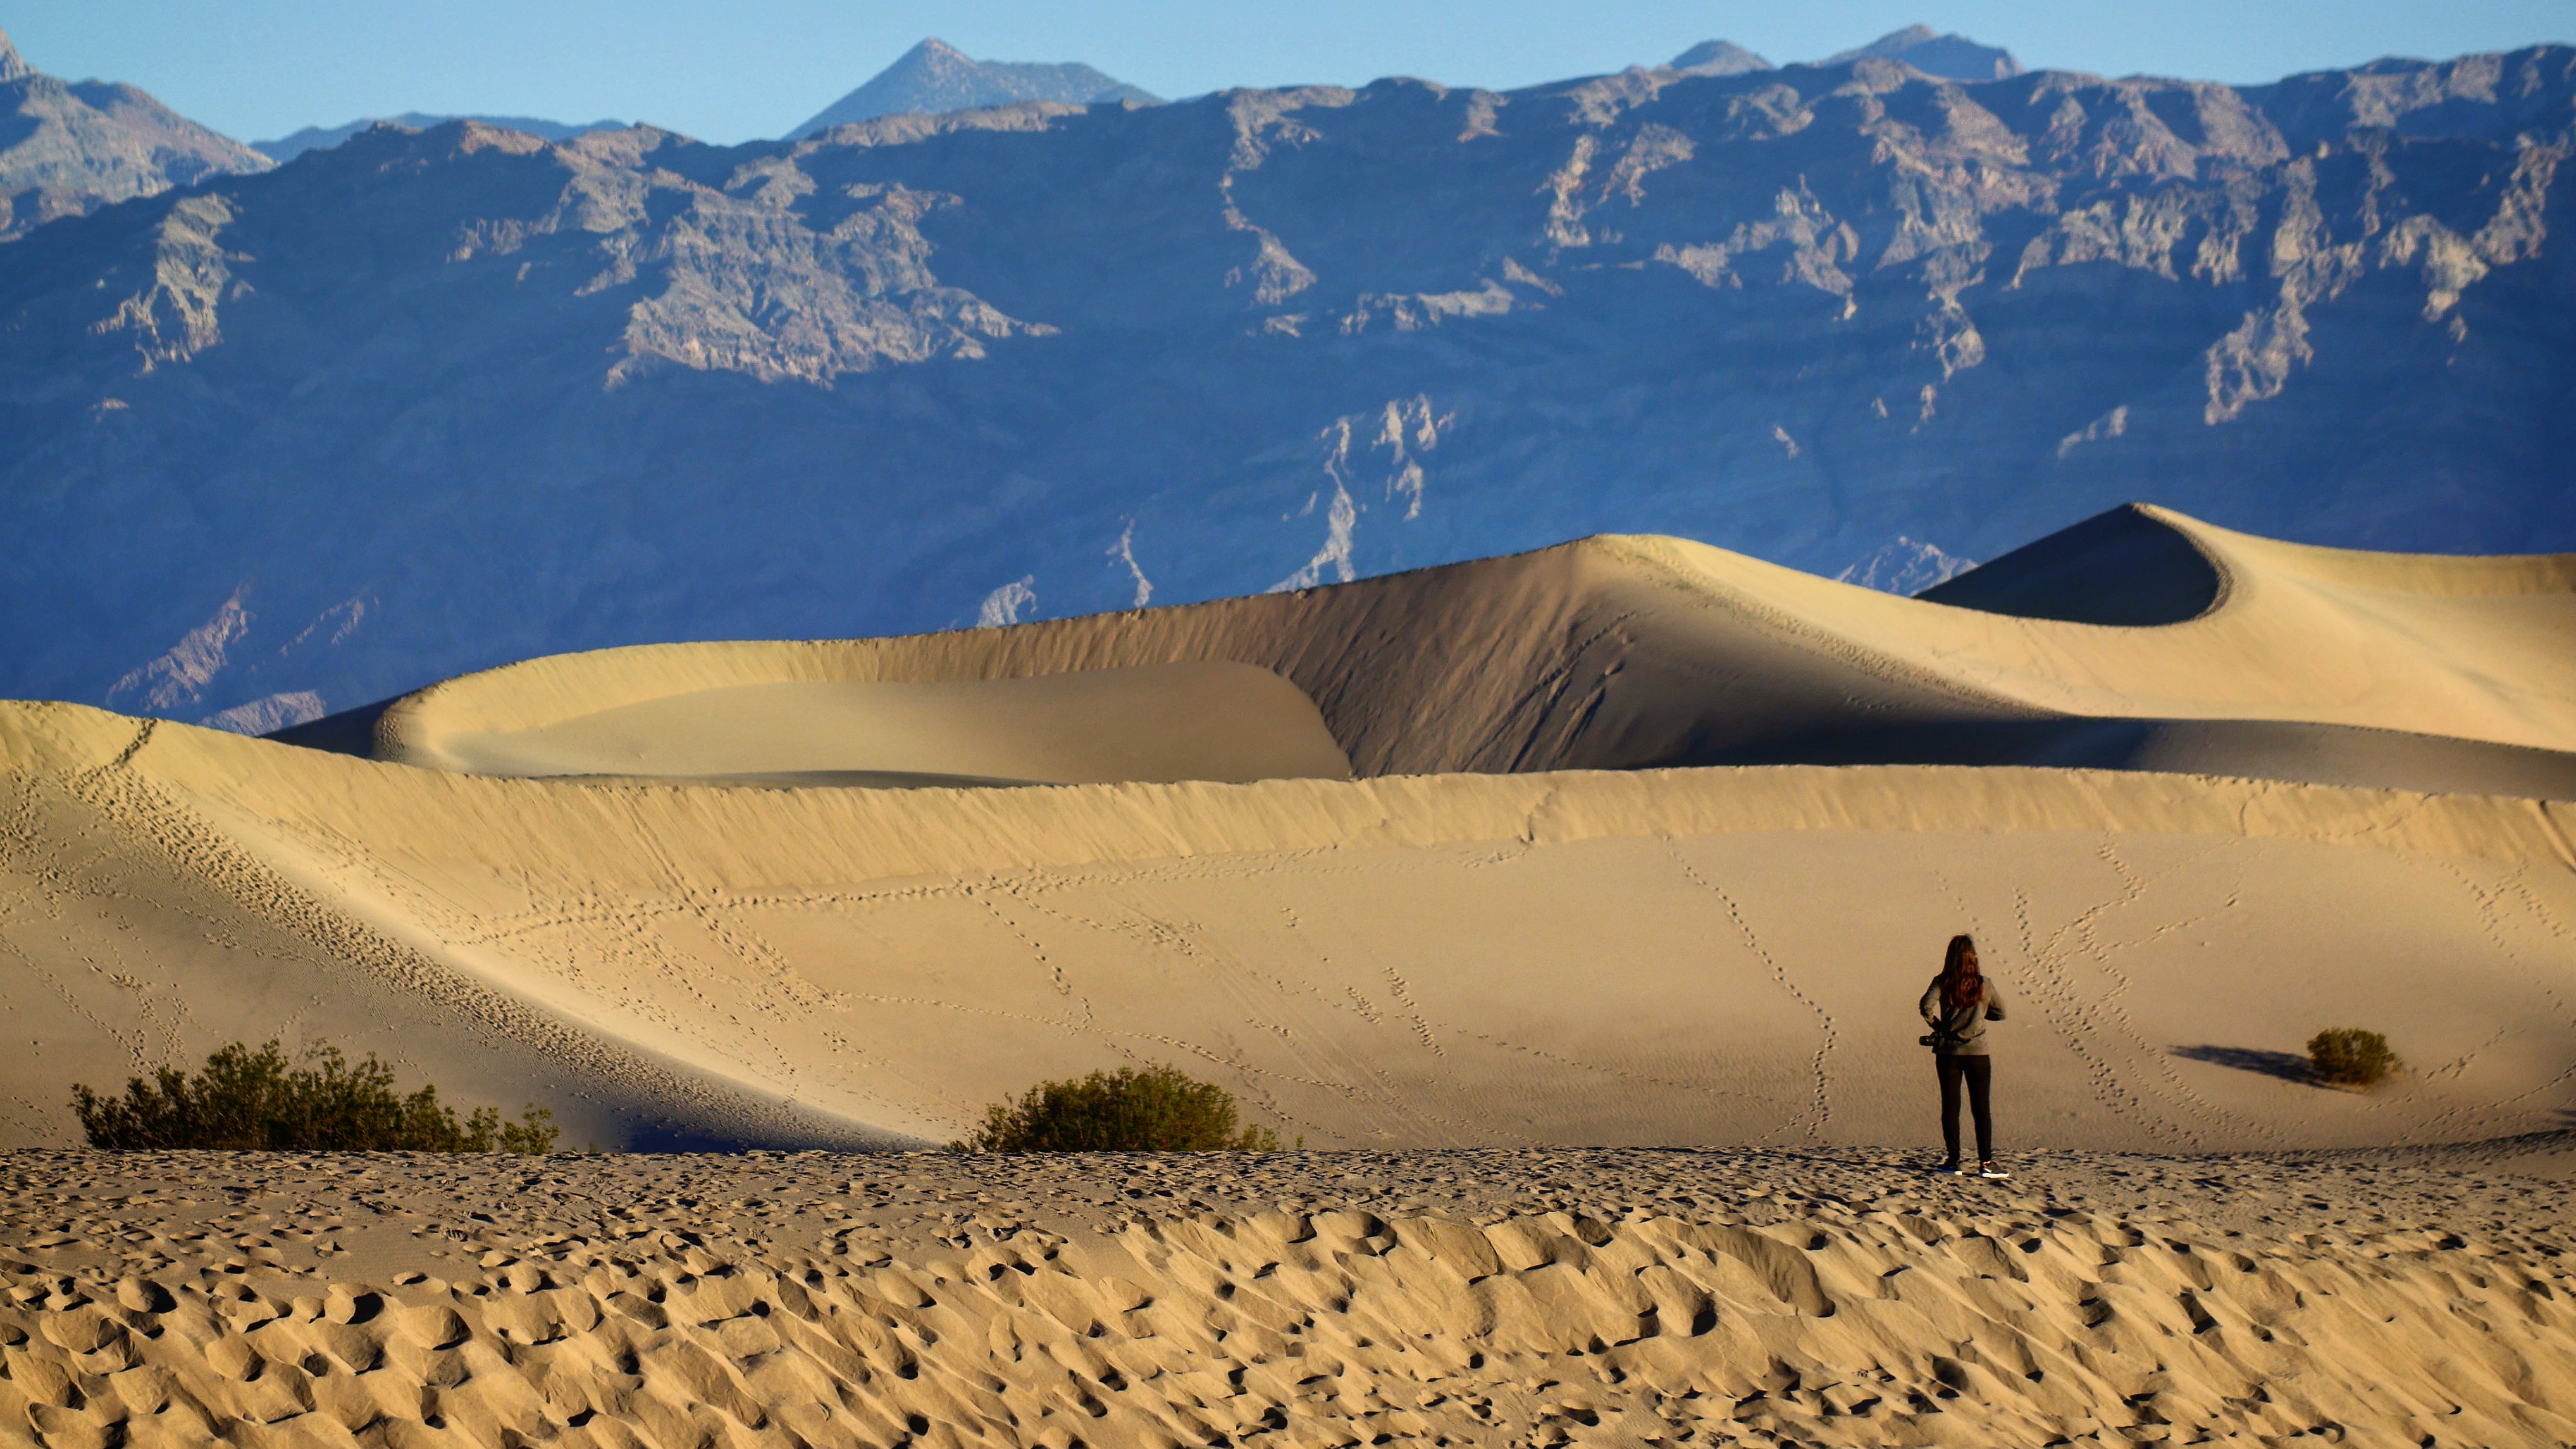 Mesquite Dunes of Death Valley